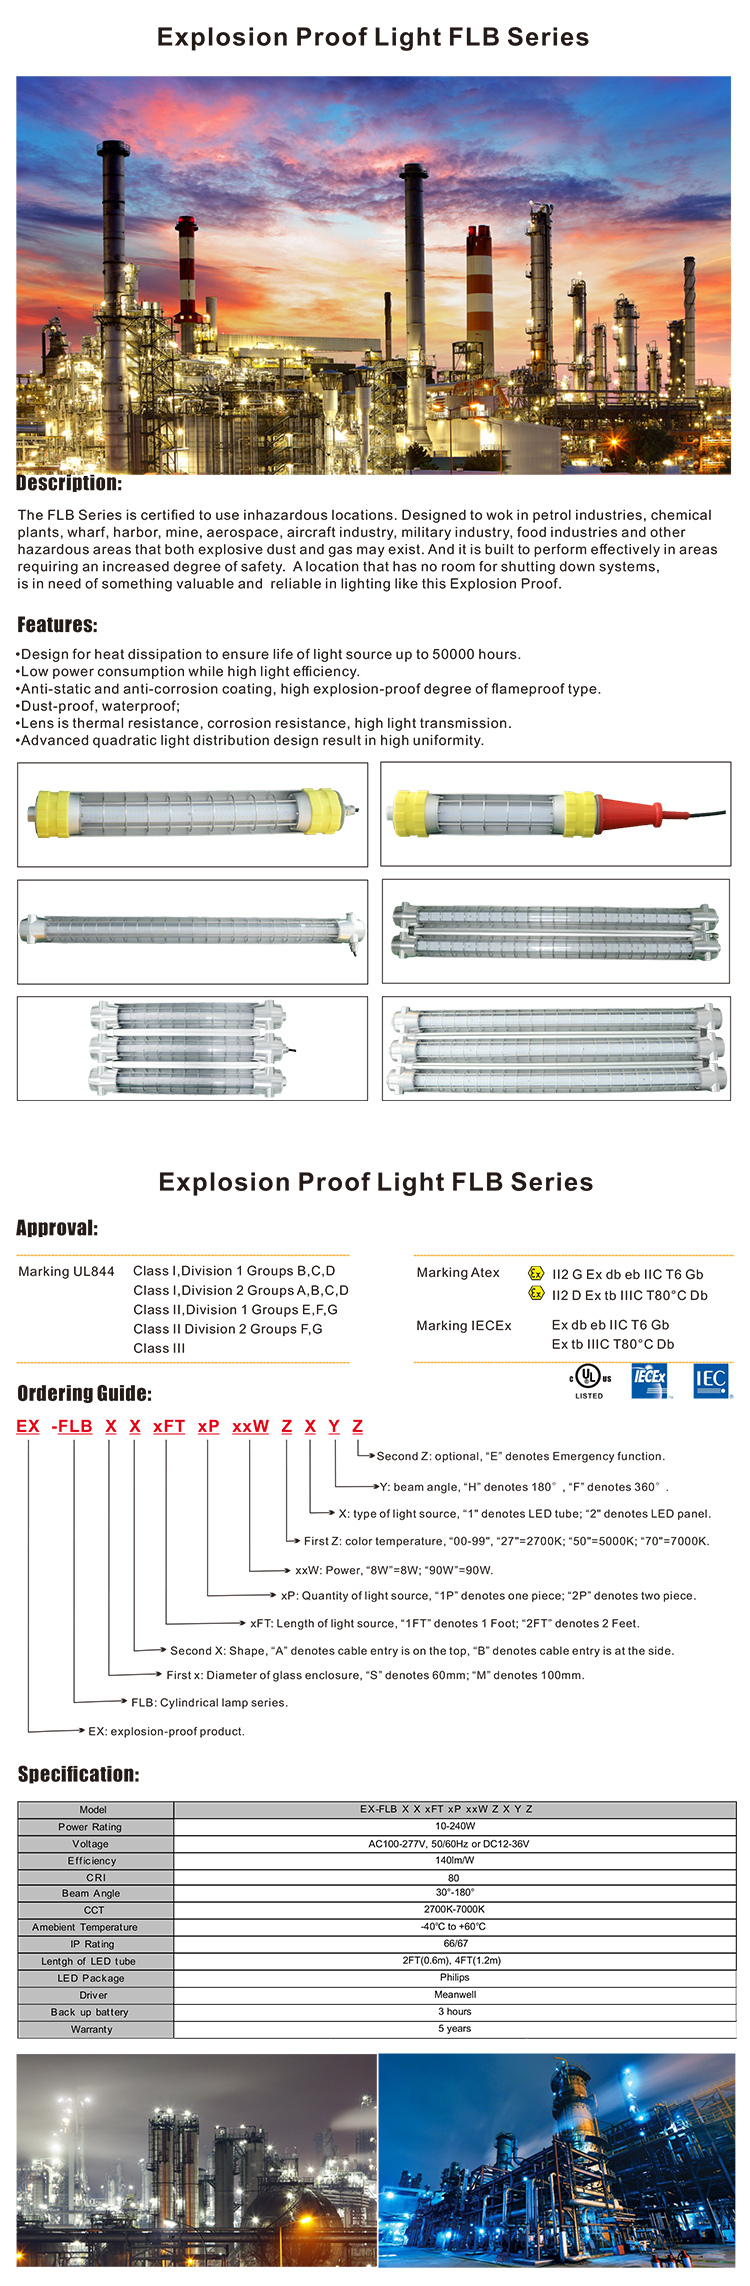 Pan American Explosion Proof Light FLB Series